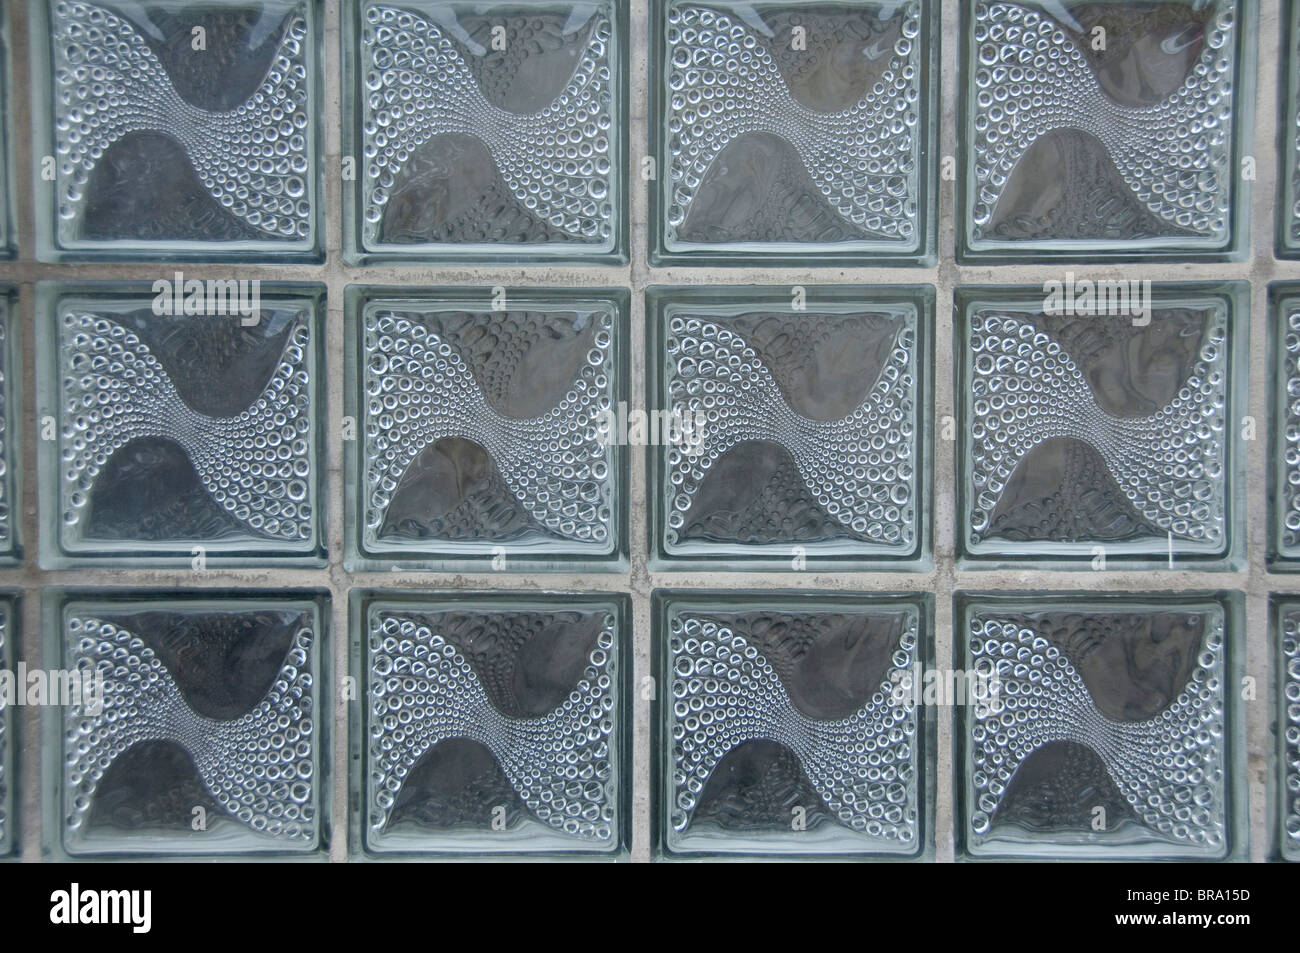 Austria, Wachau Valley, Melk. Historic downtown Melk, art glass block tile. Stock Photo